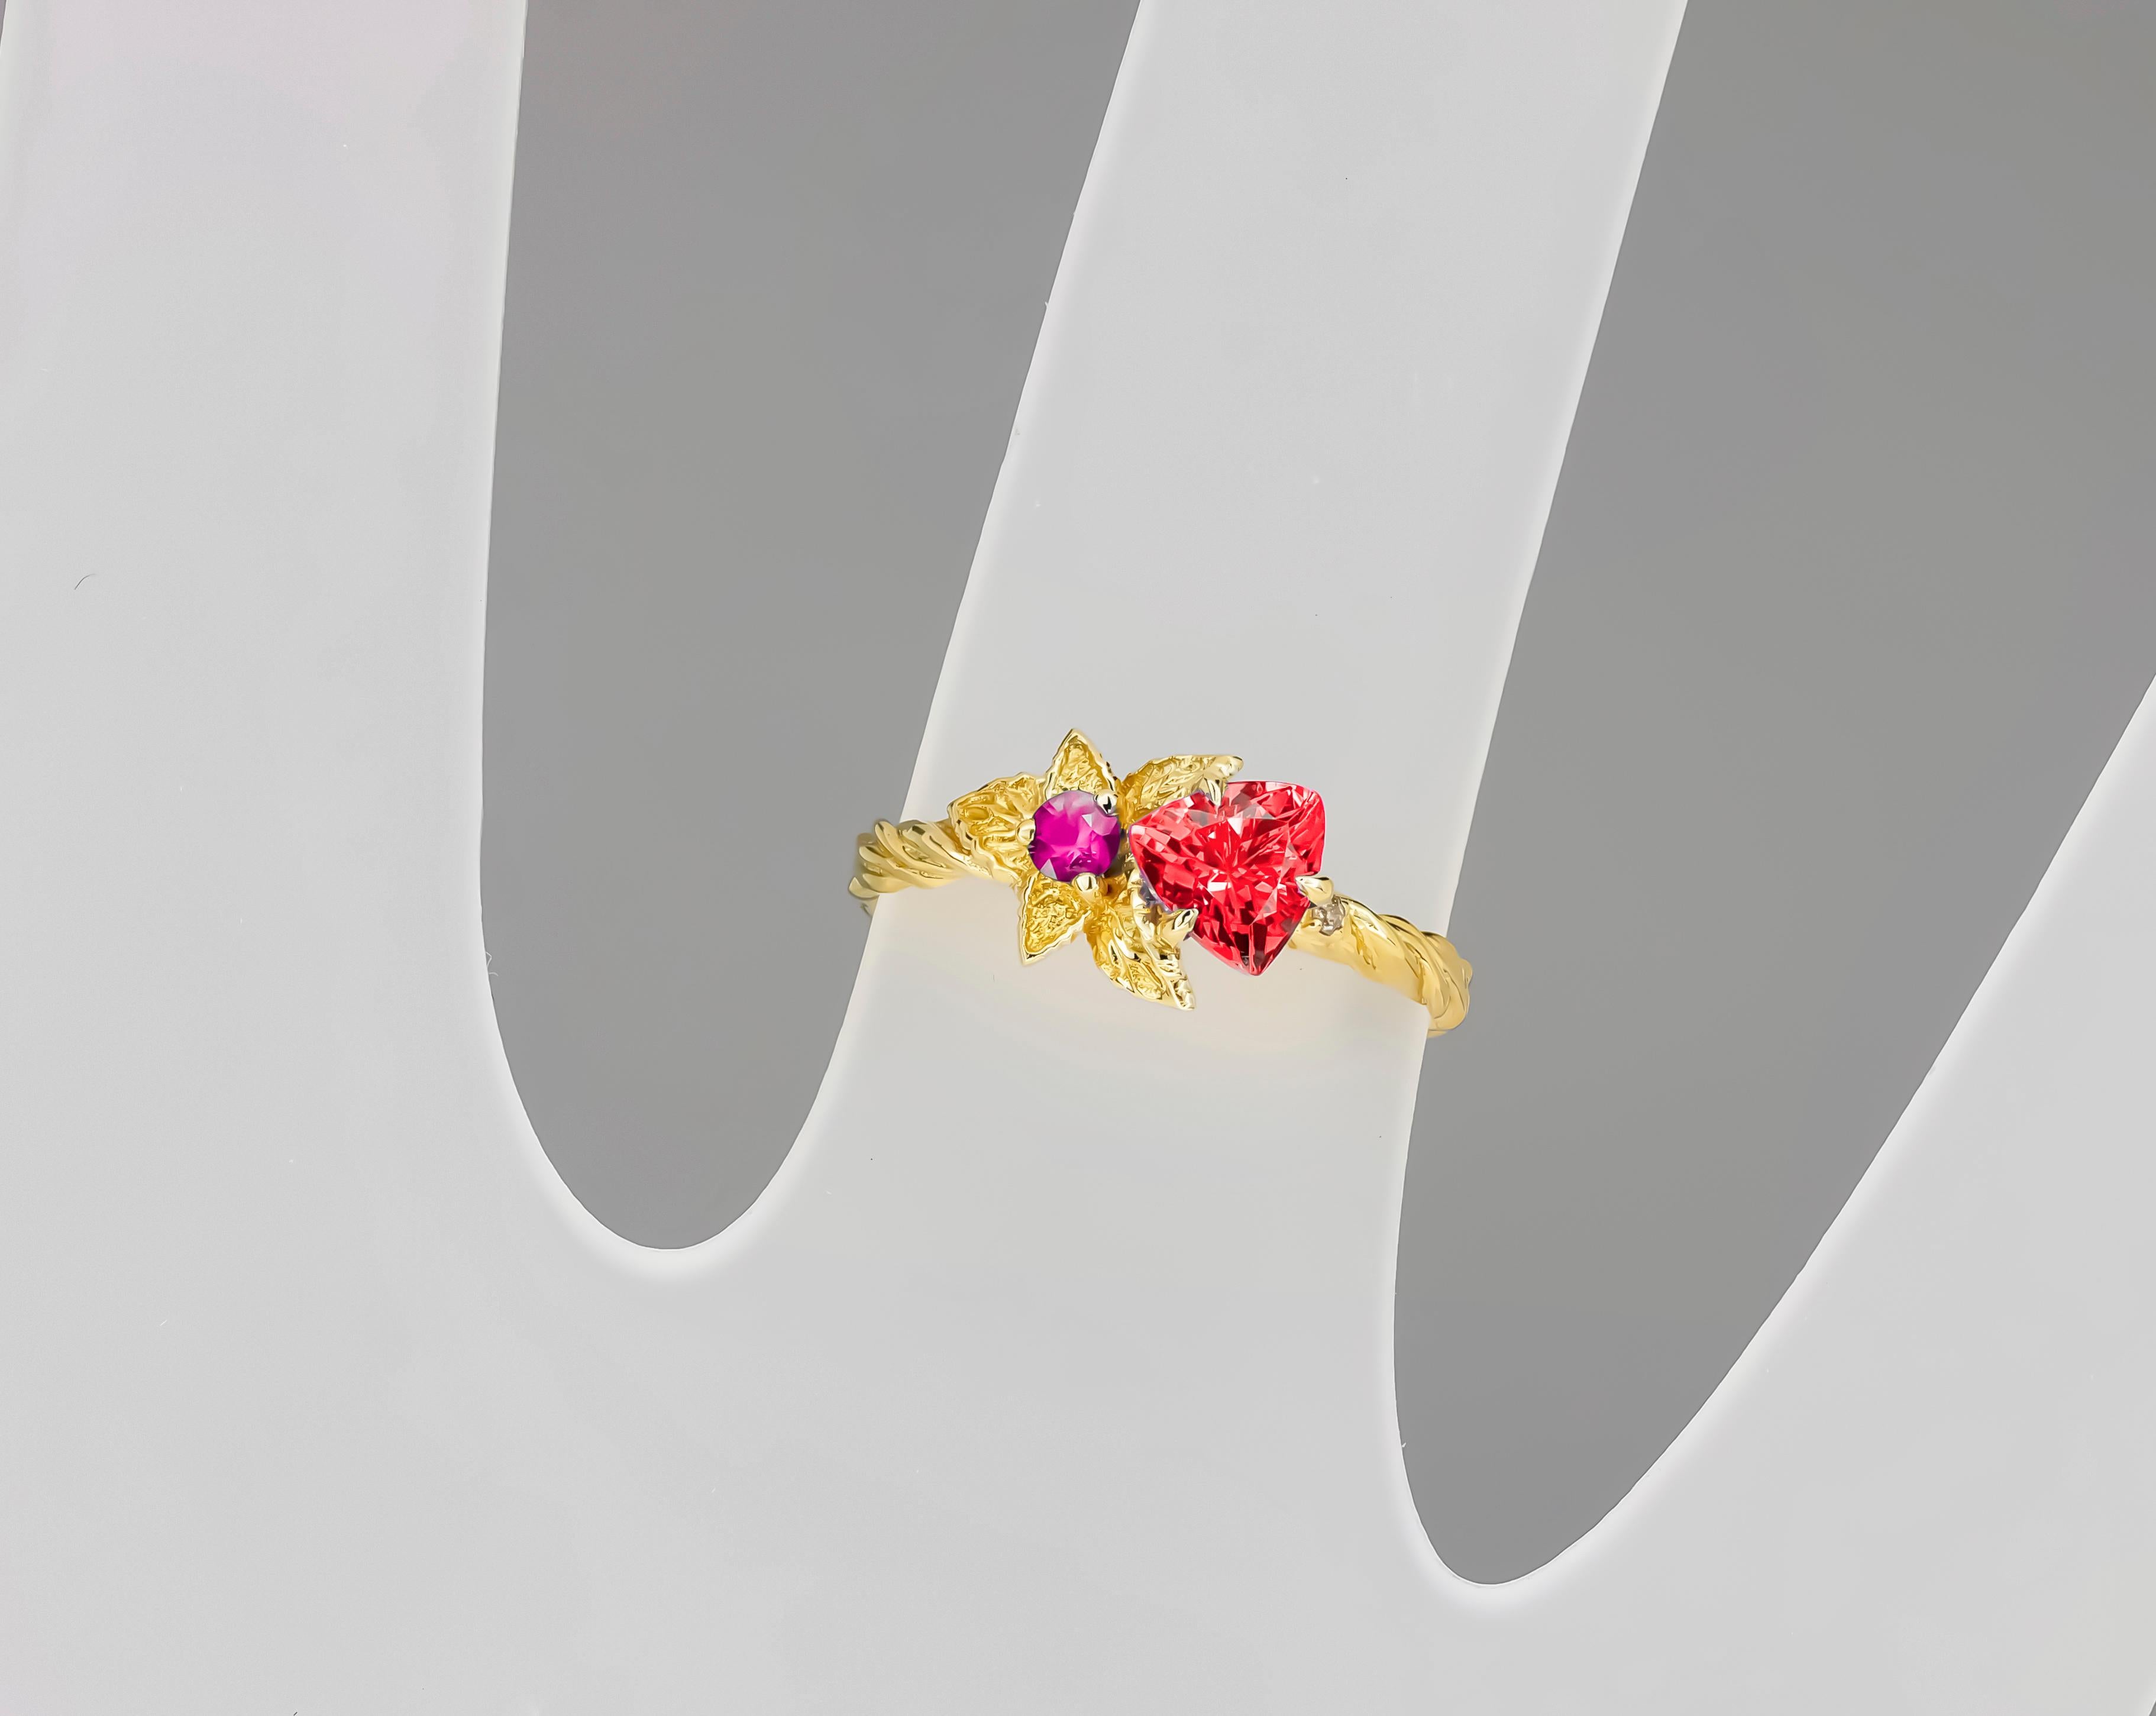 For Sale:  Flower red, purple gemstone 14k gold ring. 6